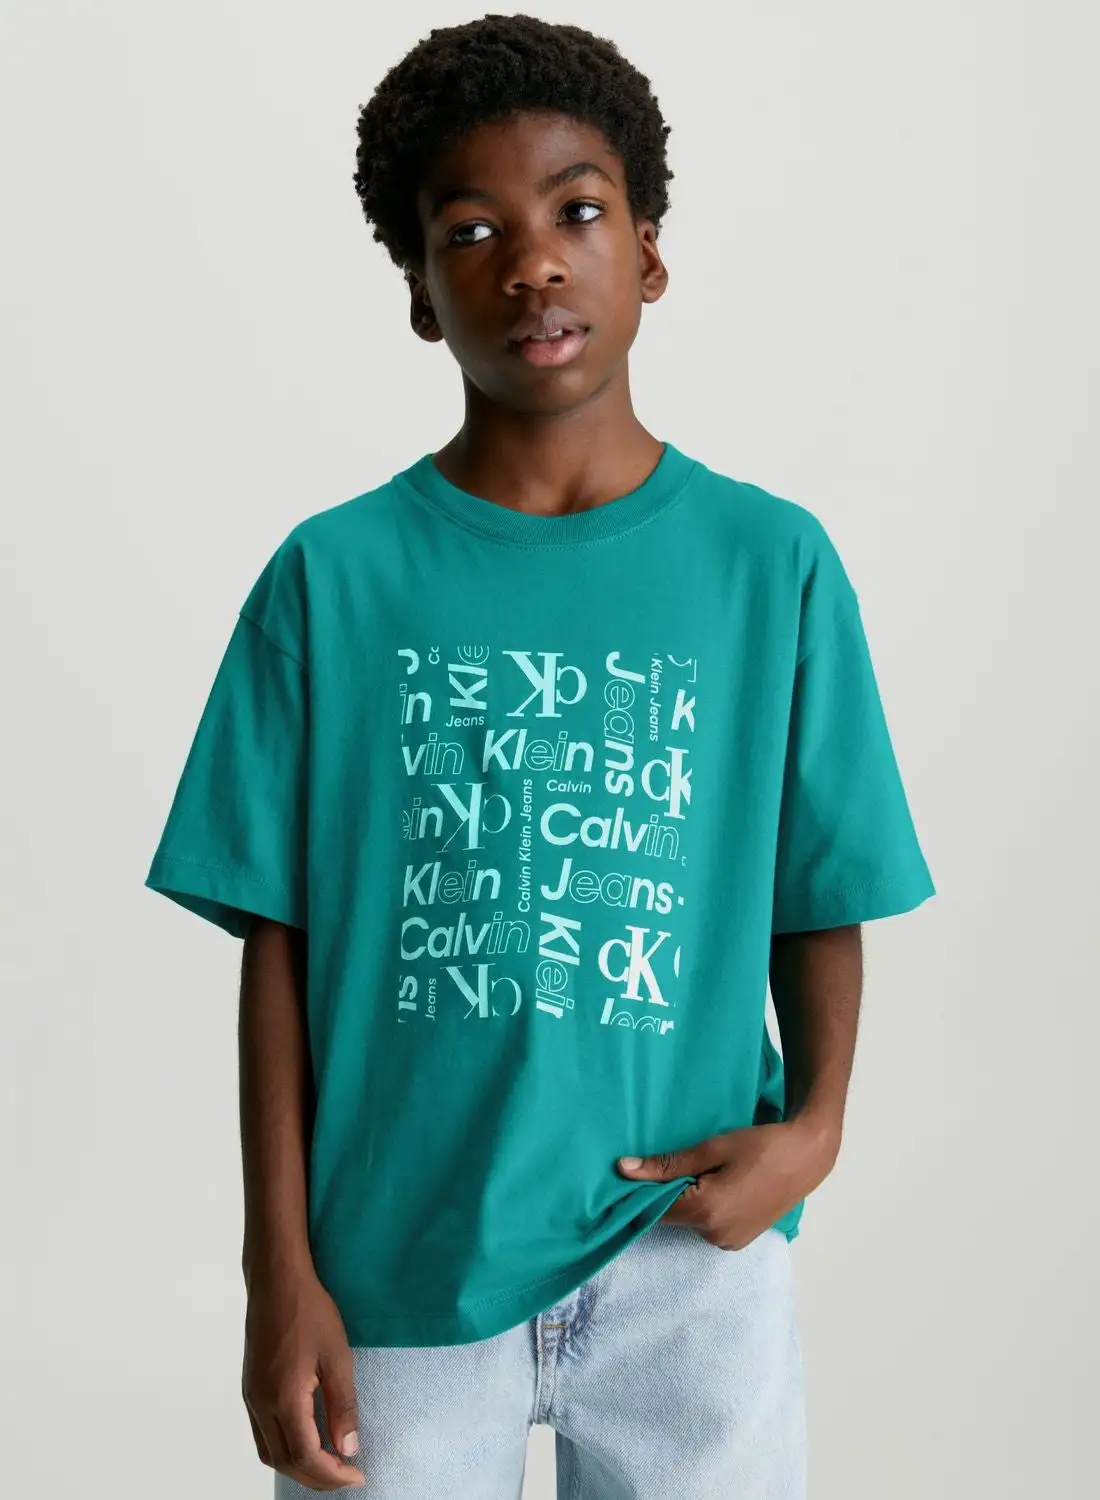 Calvin Klein Jeans Kids All Over Print T-Shirt